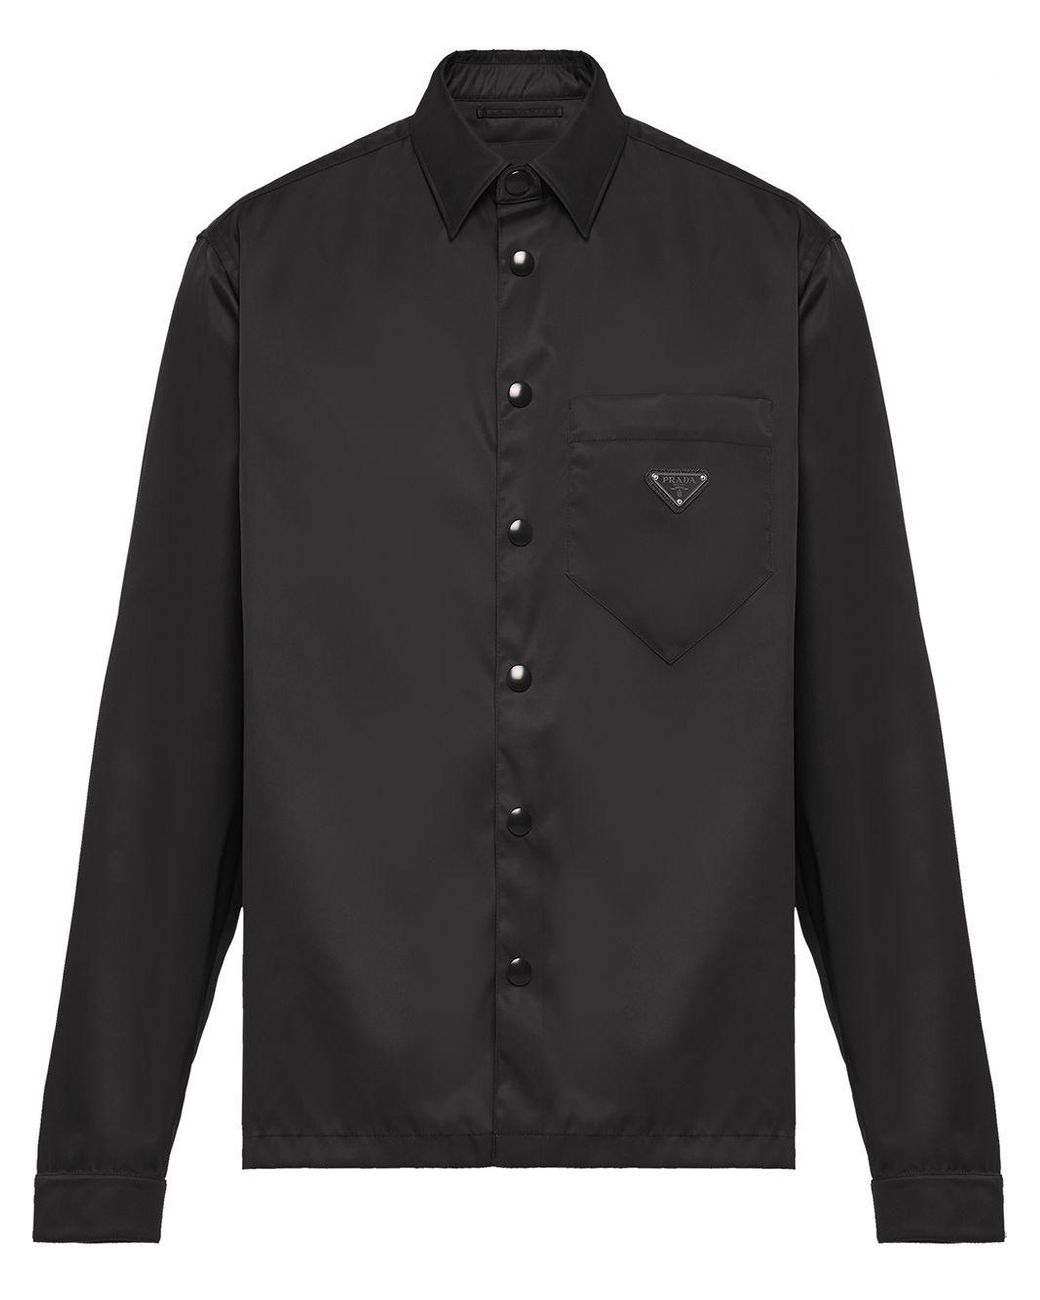 Prada Snap Button-up Shirt in Black for Men - Lyst